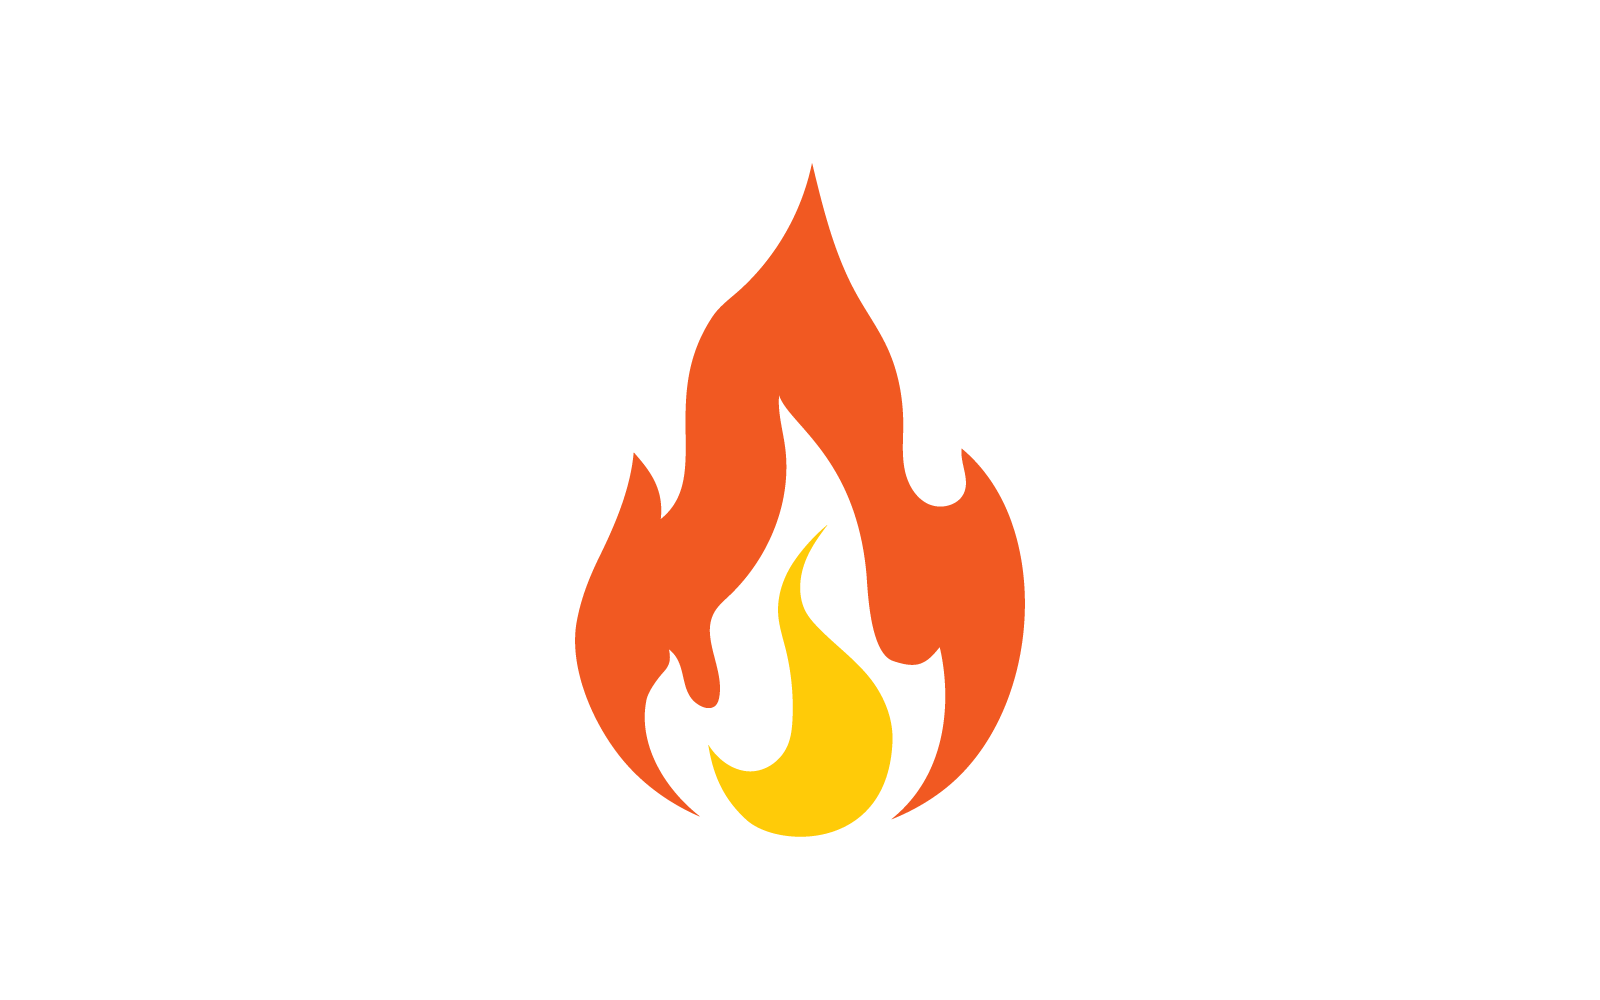 Fire flame Logo vector, Oil, gas and energy logo flat design concept